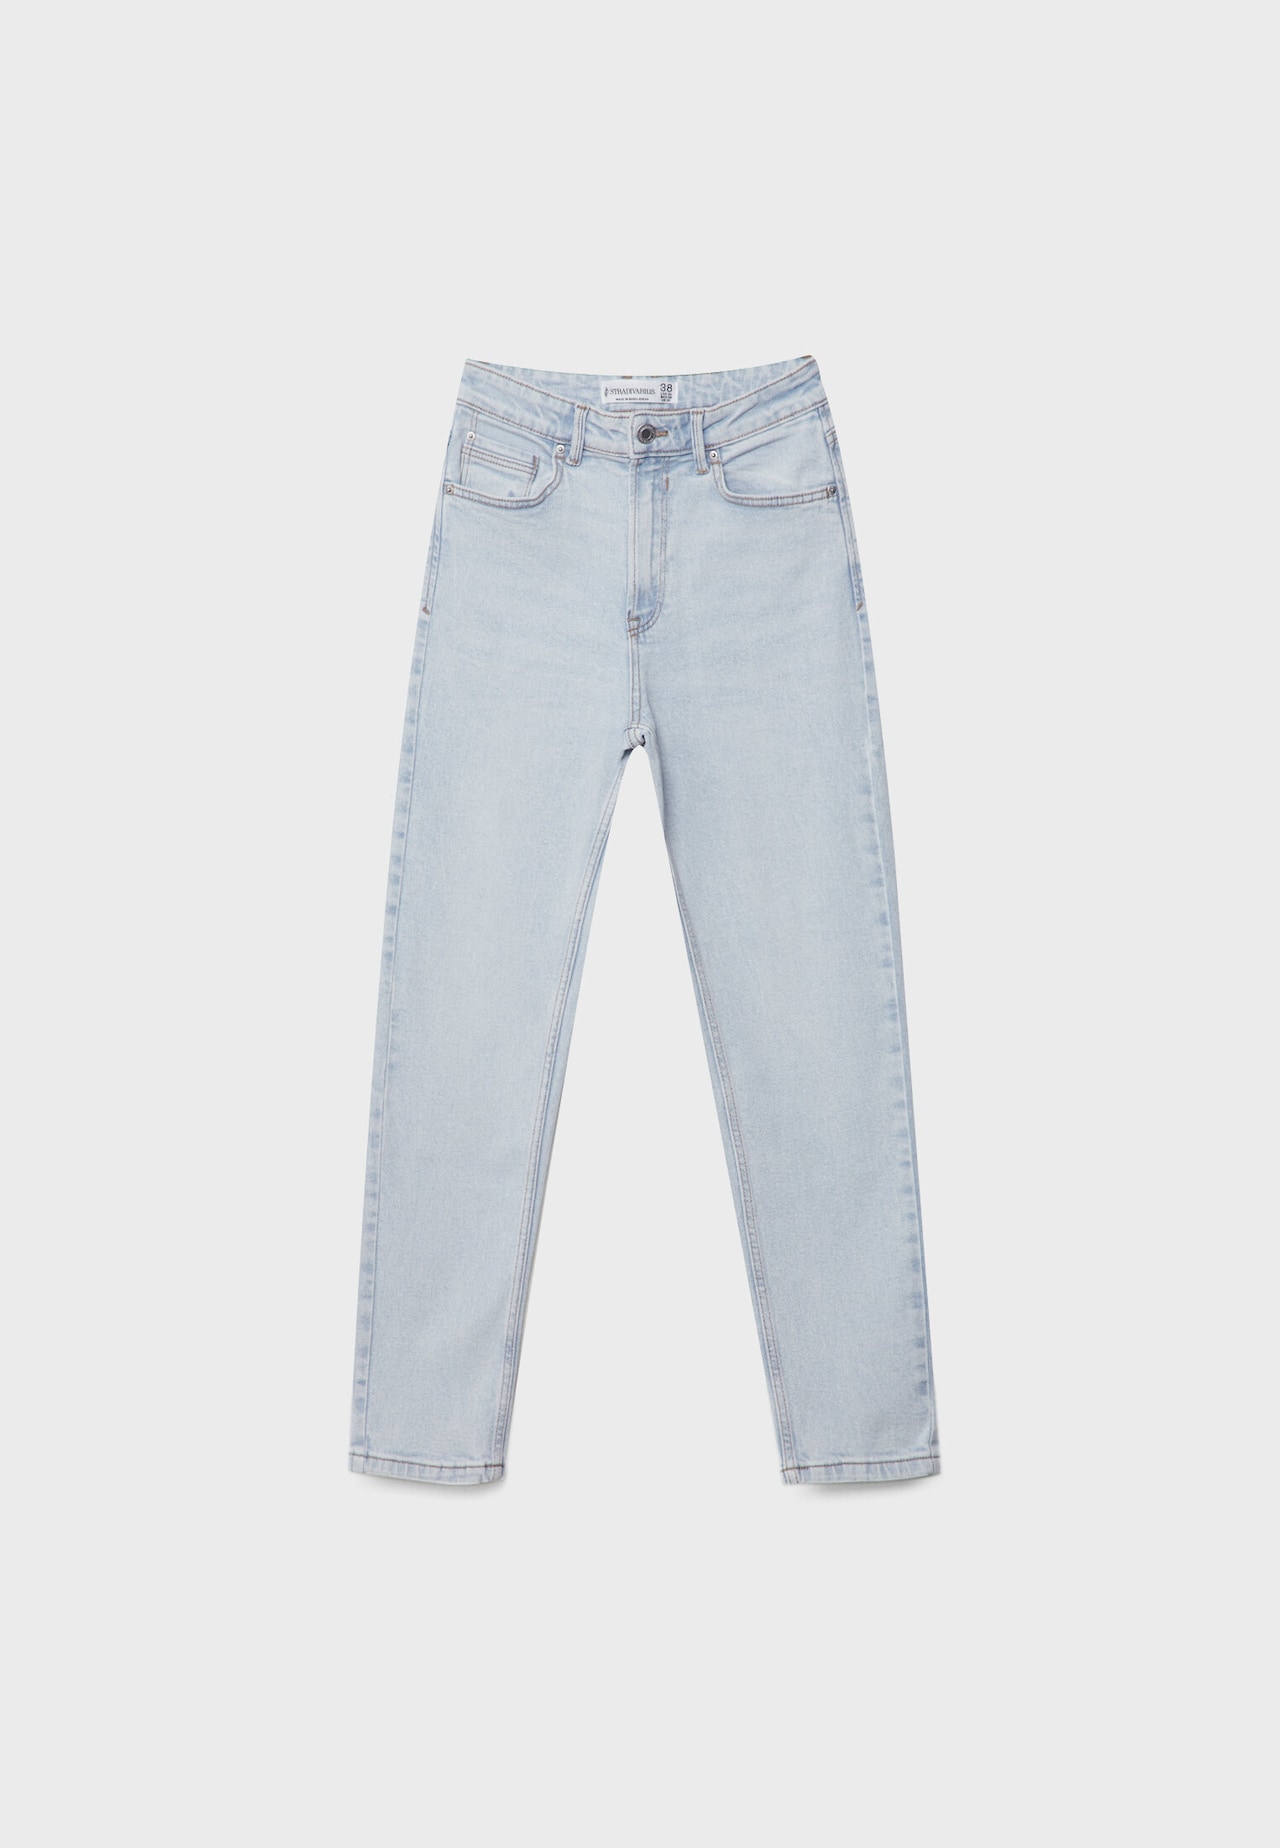 1465 Slim-fit mom jeans - Women's fashion